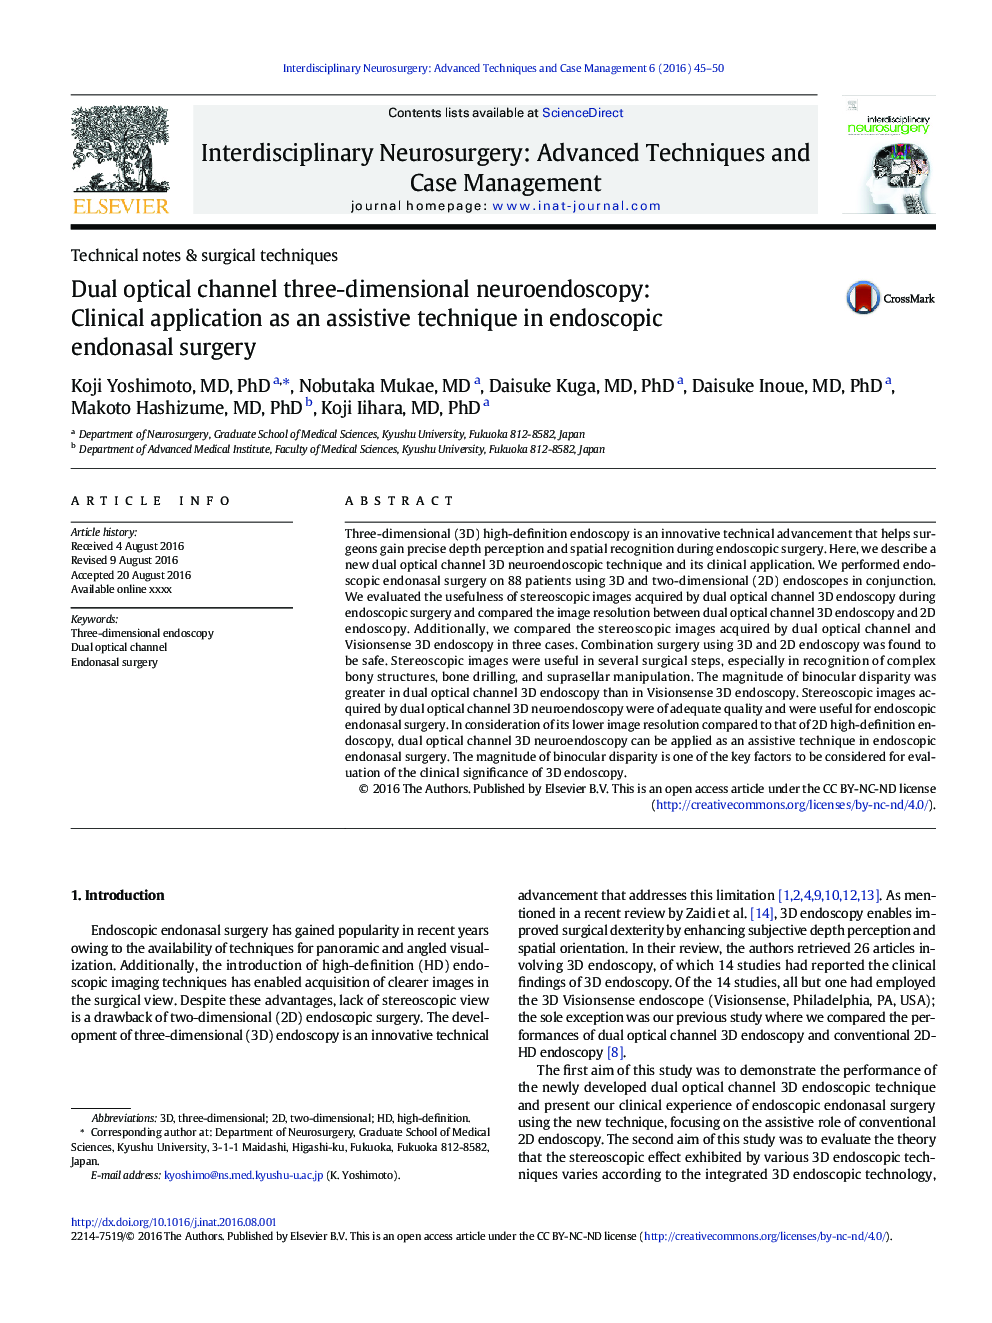 Dual optical channel three-dimensional neuroendoscopy: Clinical application as an assistive technique in endoscopic endonasal surgery